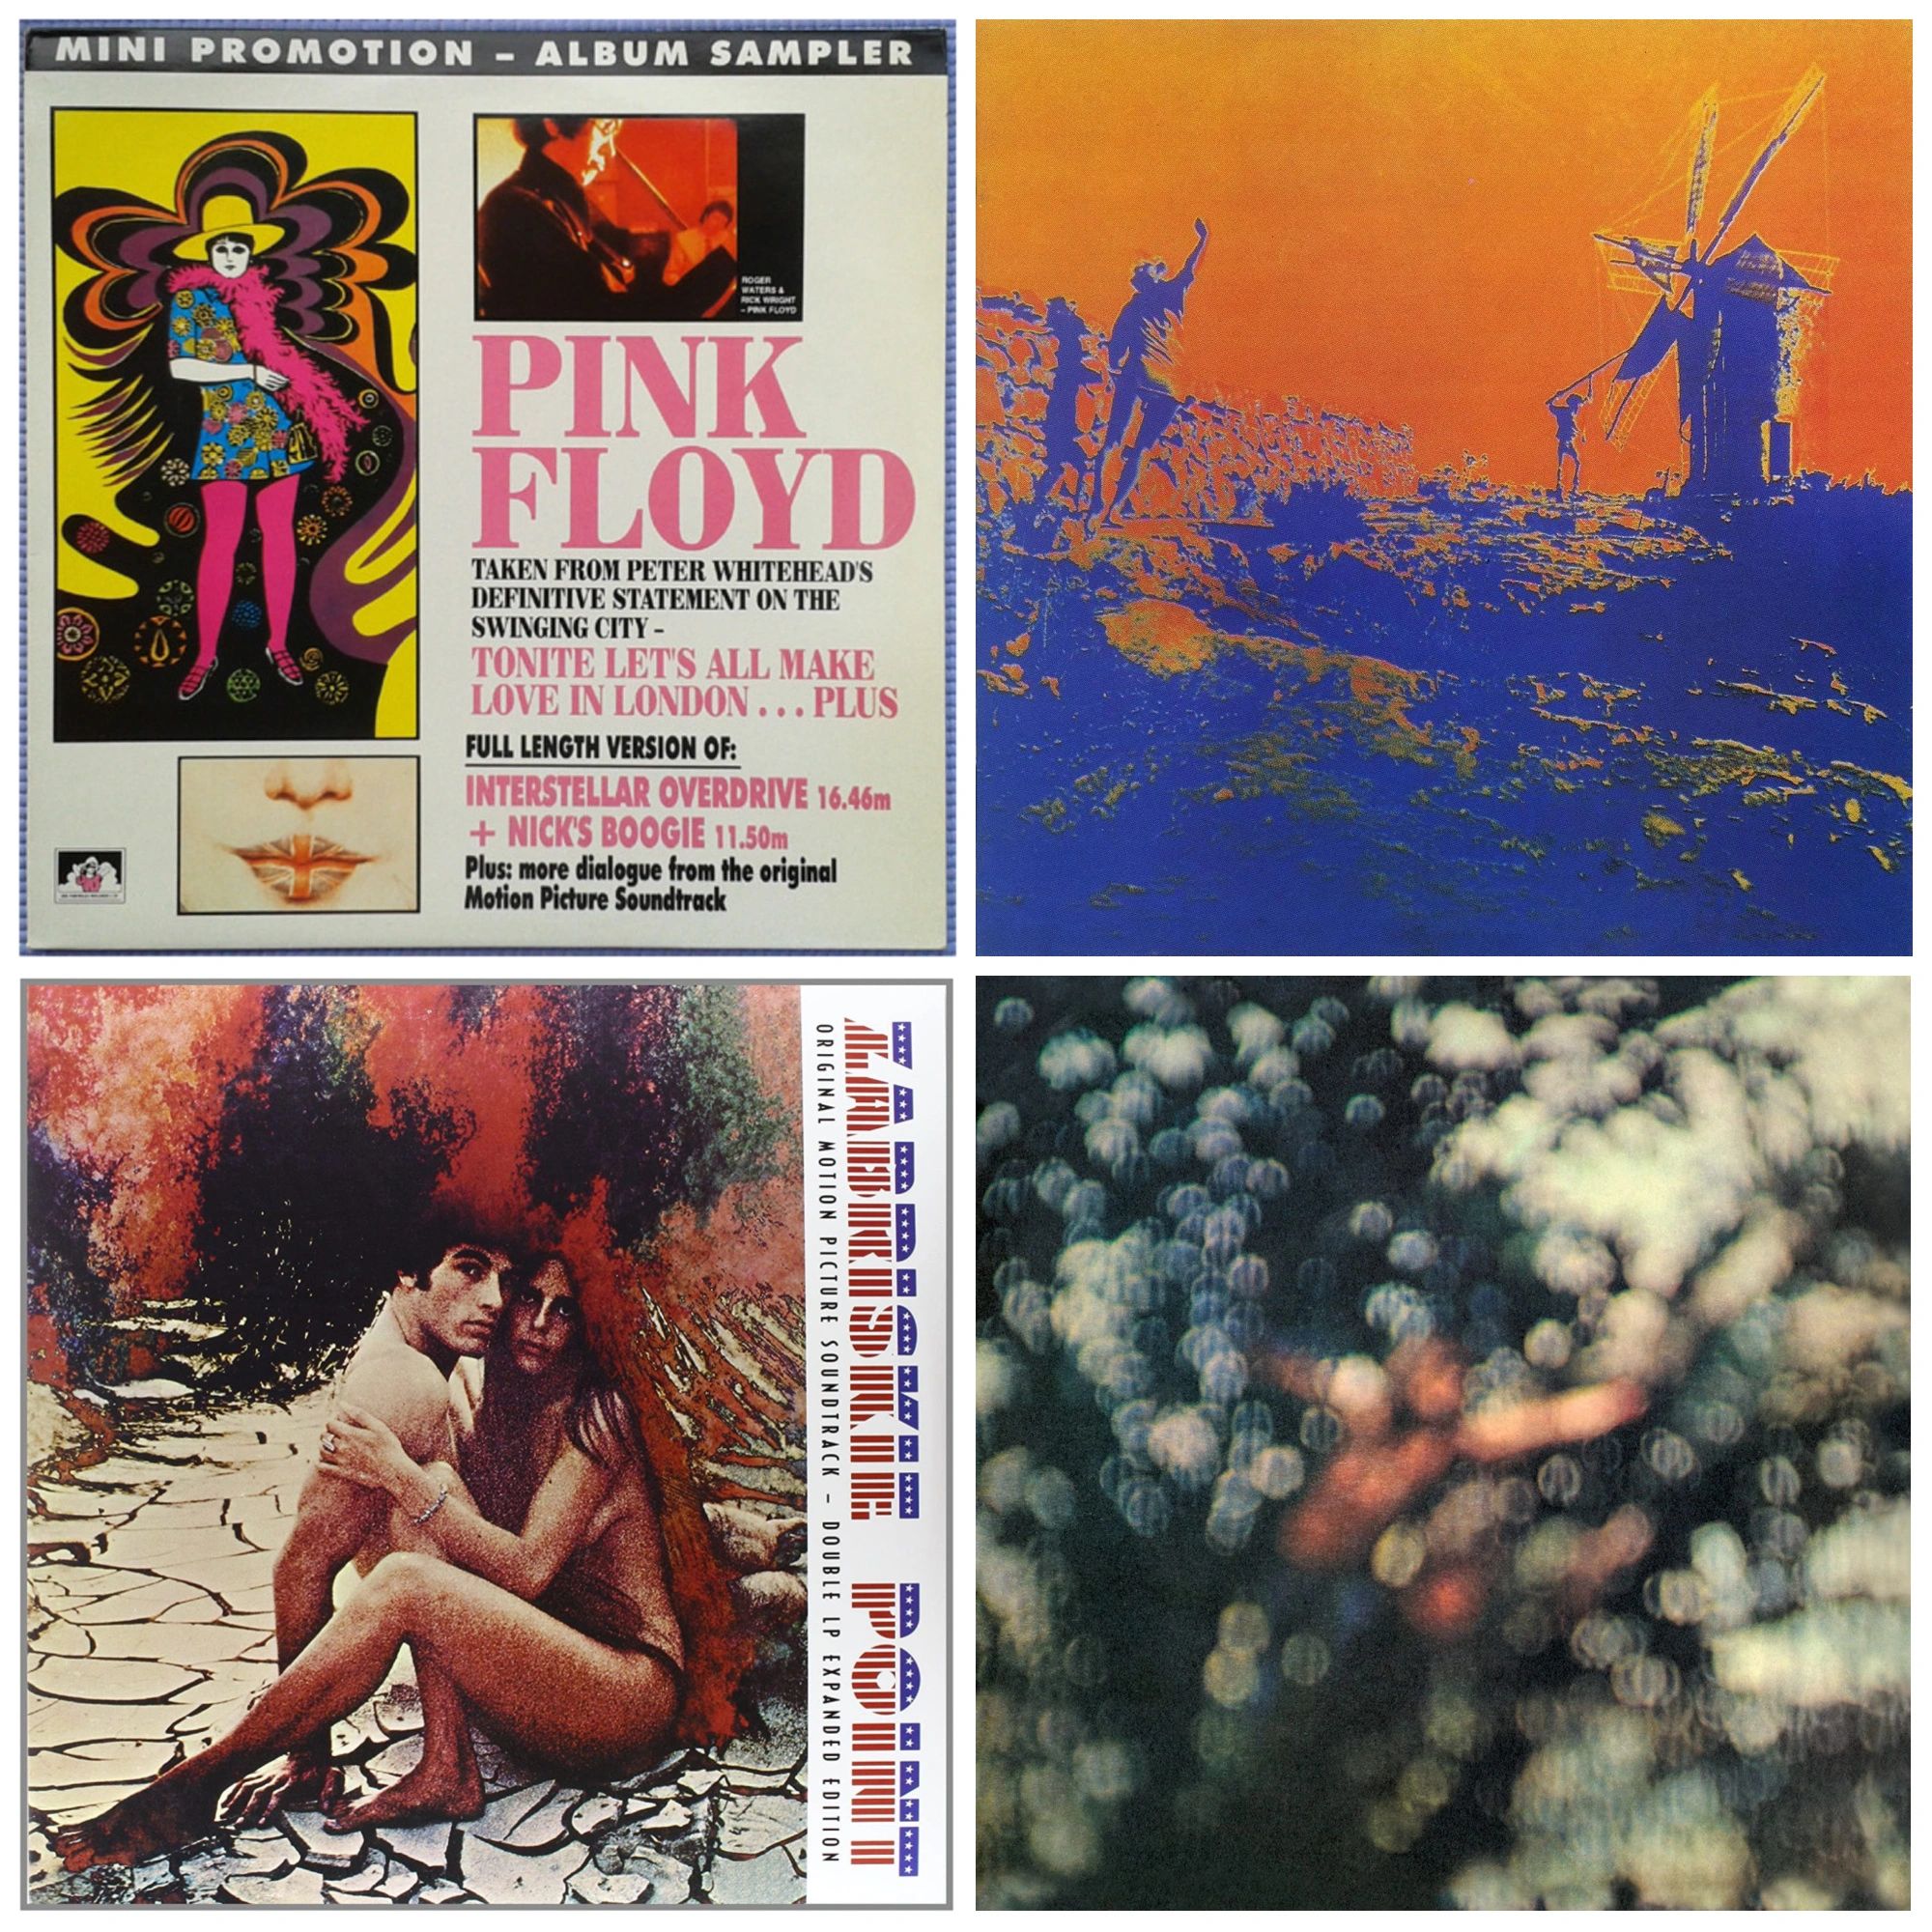 Colage de album de sound track de Pink Floyd